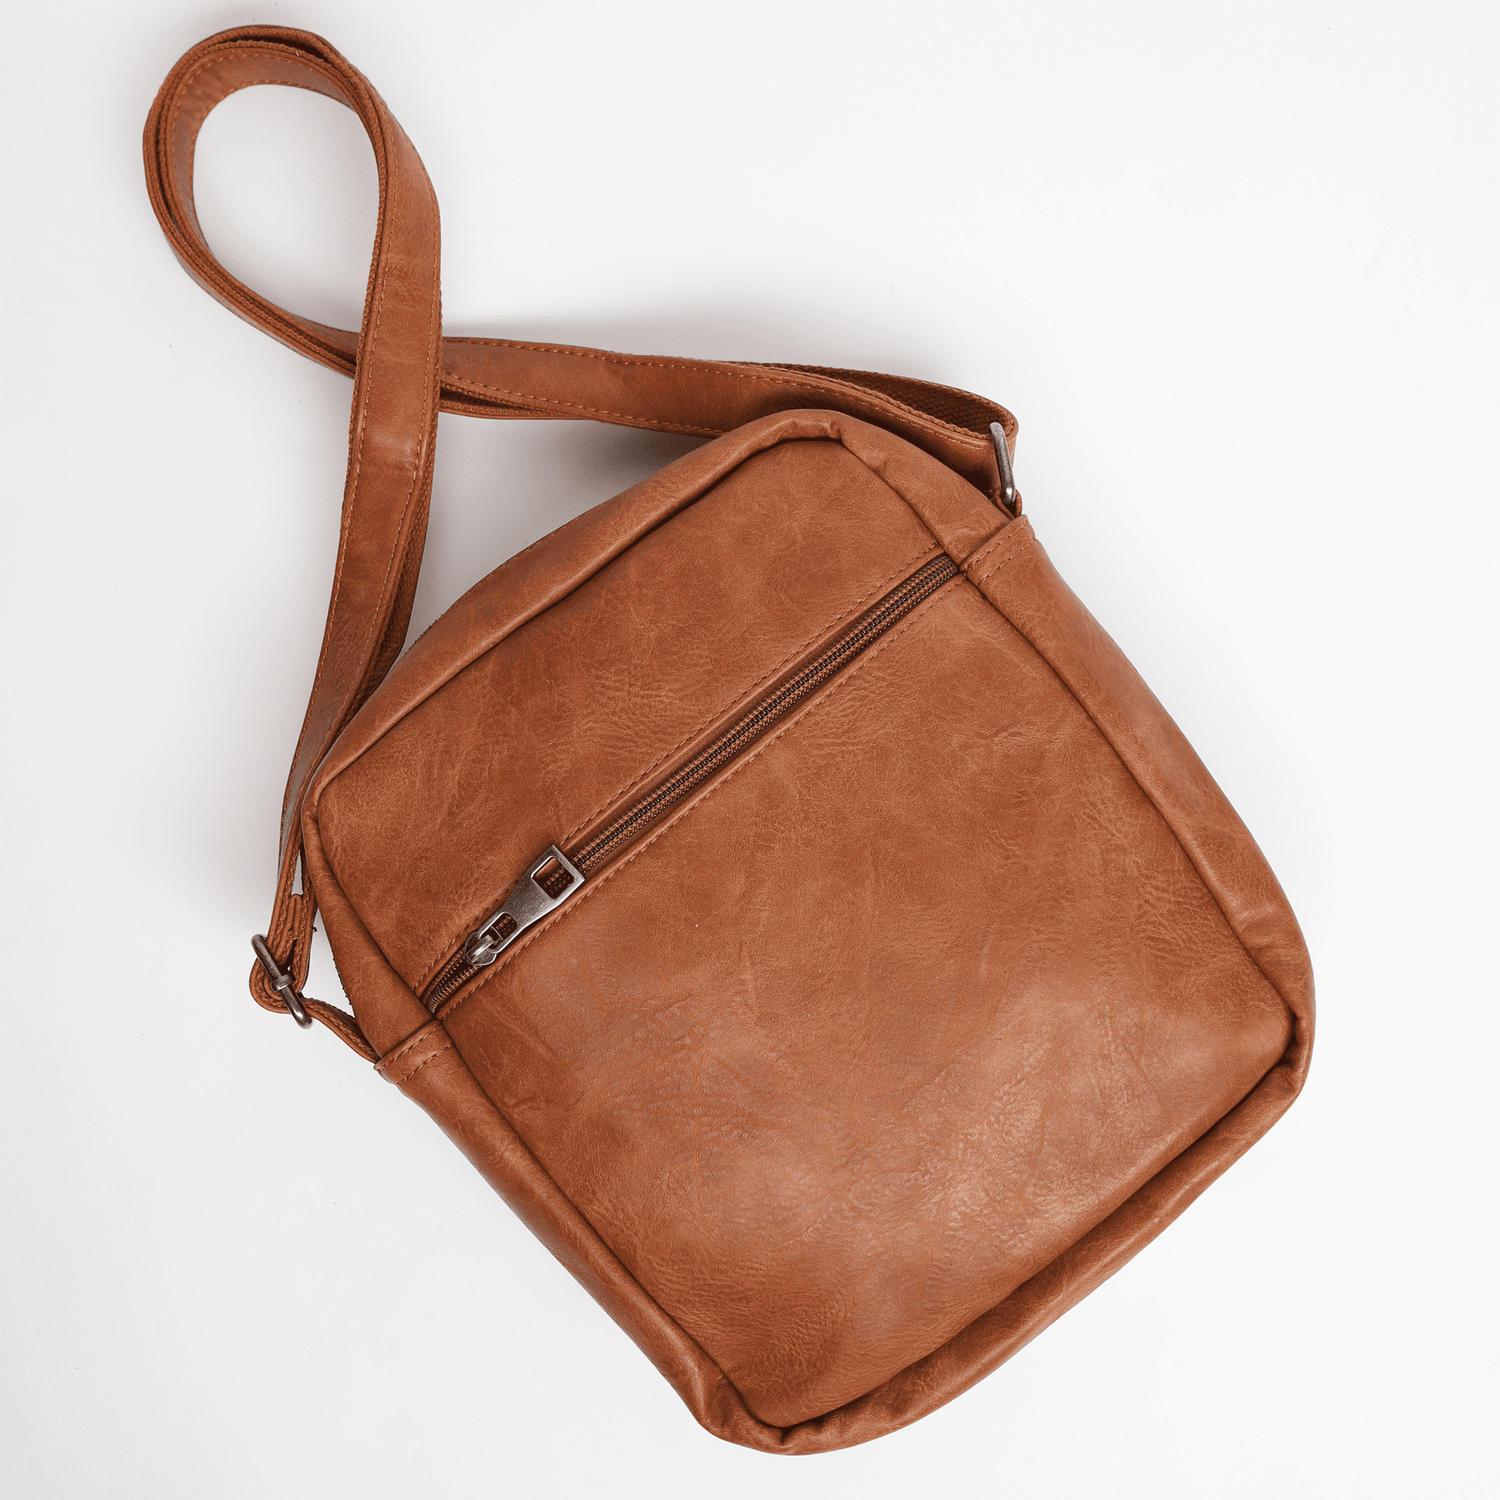 bagular crossbbody bag for men. Brown shoulder bag made from faux vegan leather. Soft, lightweight and durable bag, gift for him